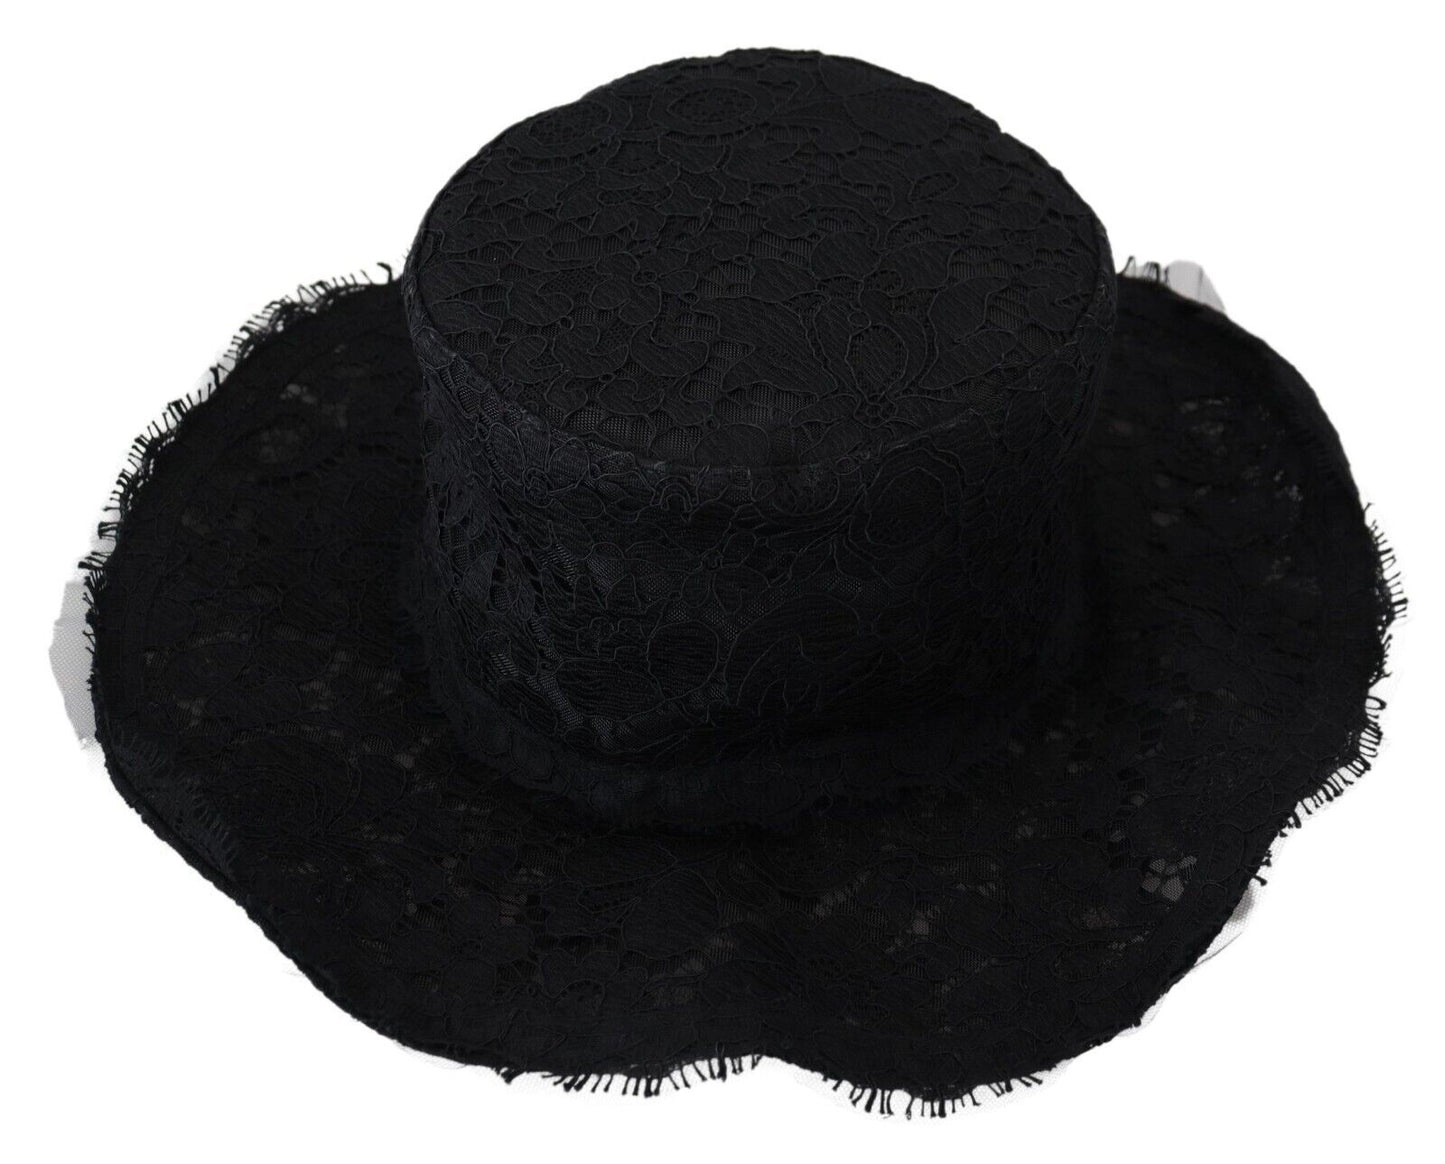 Elegant Black Top Hat - Timeless Fashion Statement